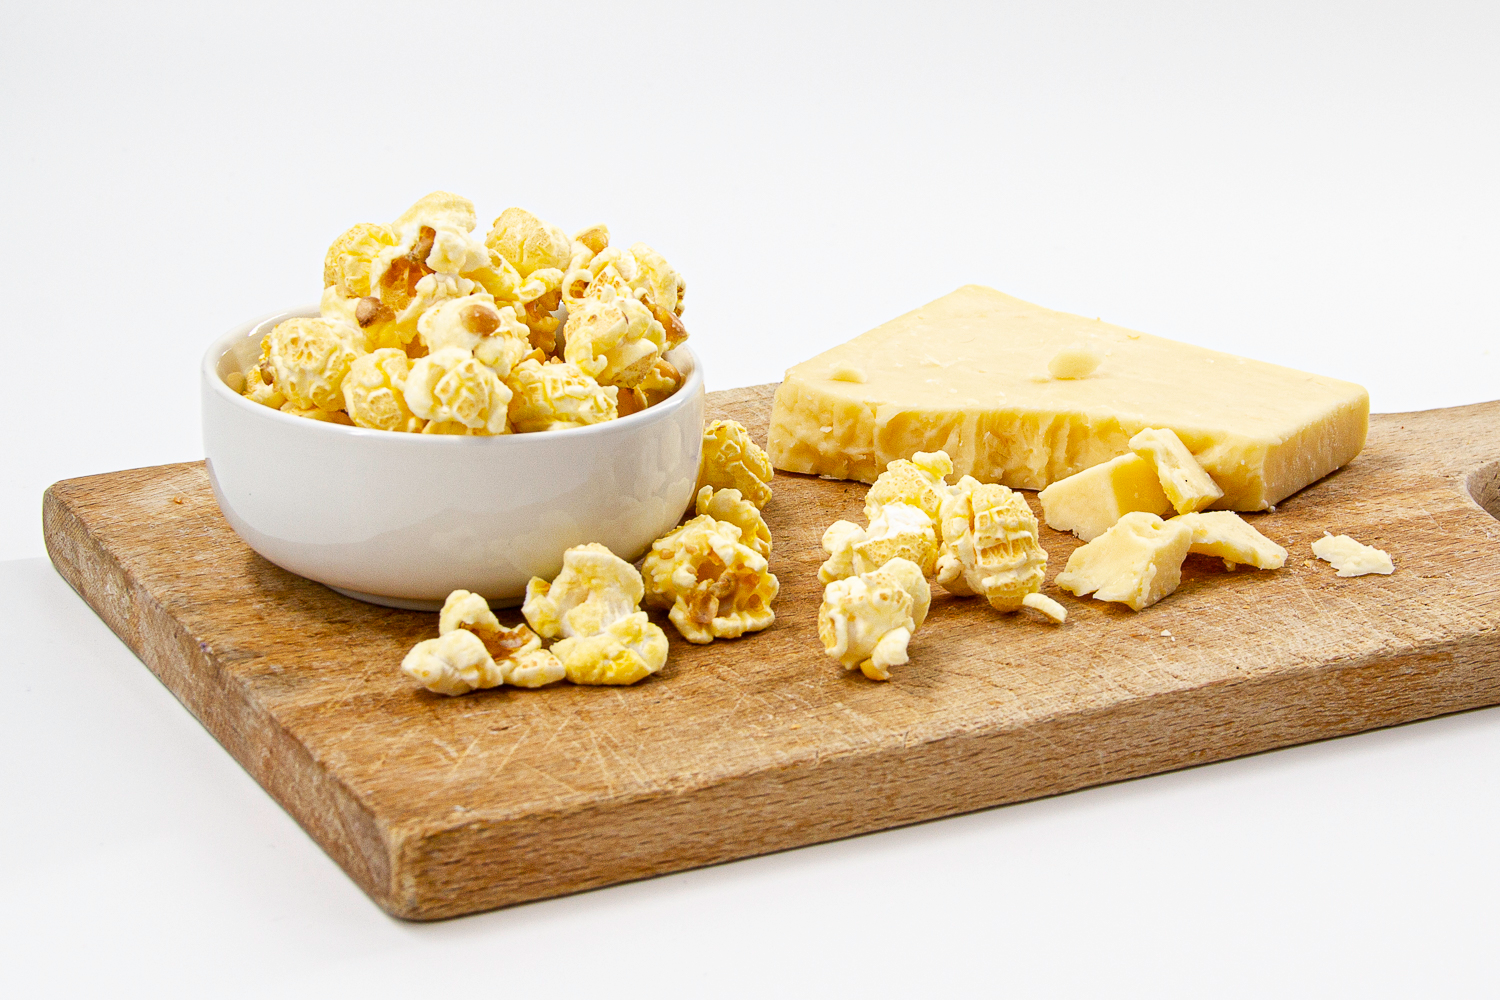 Bulk Gourmet Popcorn - The Best Caramel